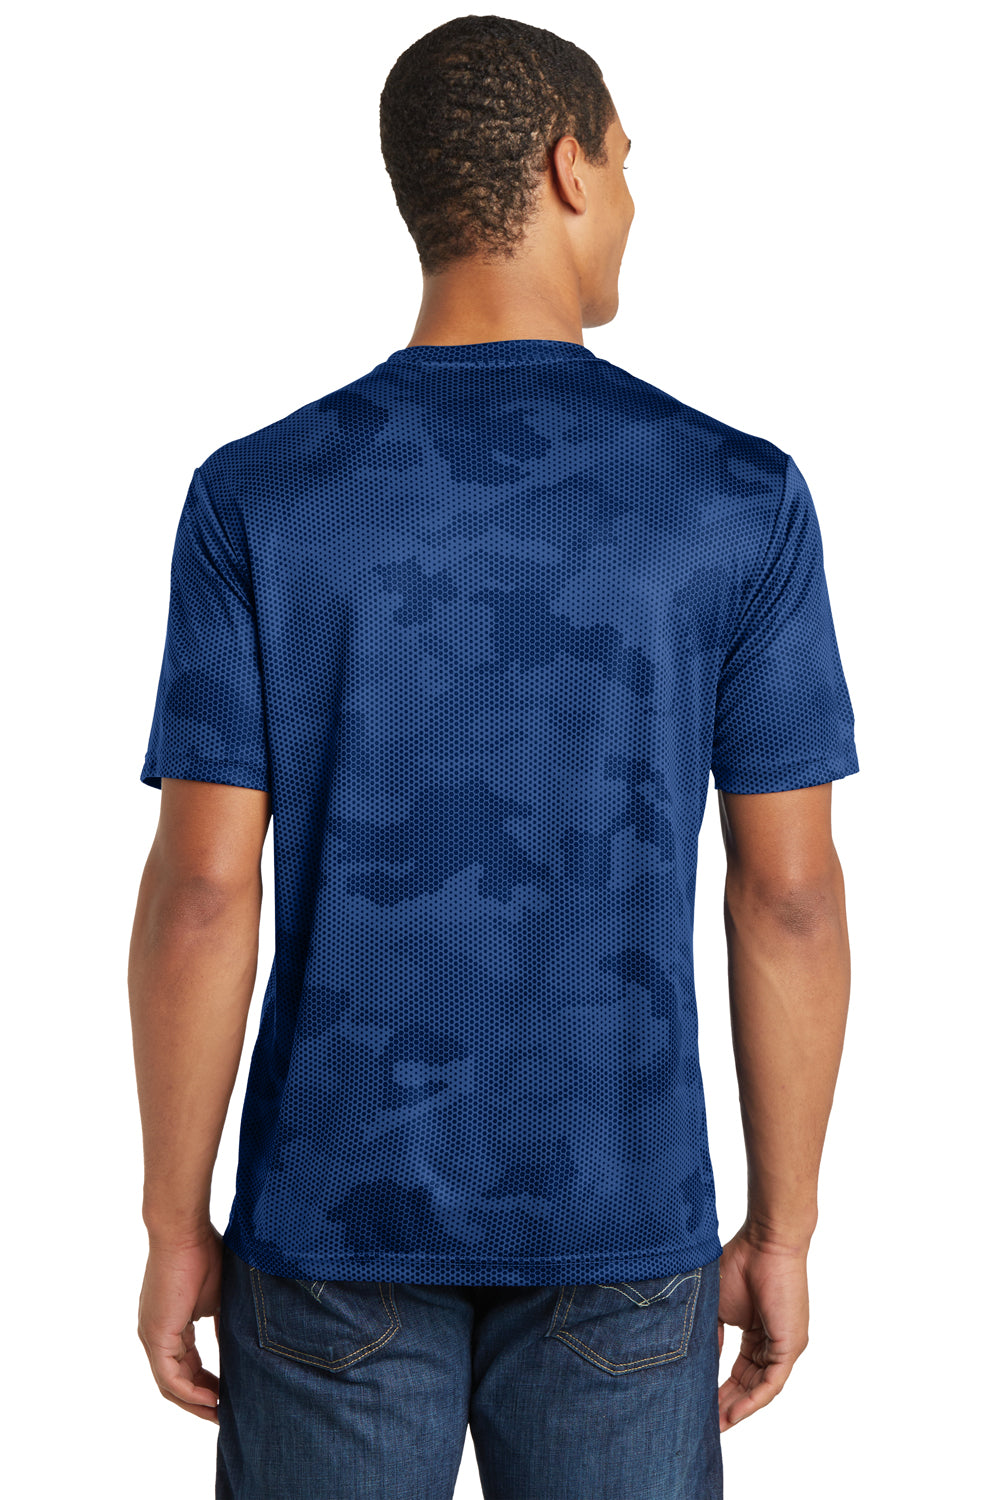 Sport-Tek ST370 Mens CamoHex Moisture Wicking Short Sleeve Crewneck T-Shirt Royal Blue Back